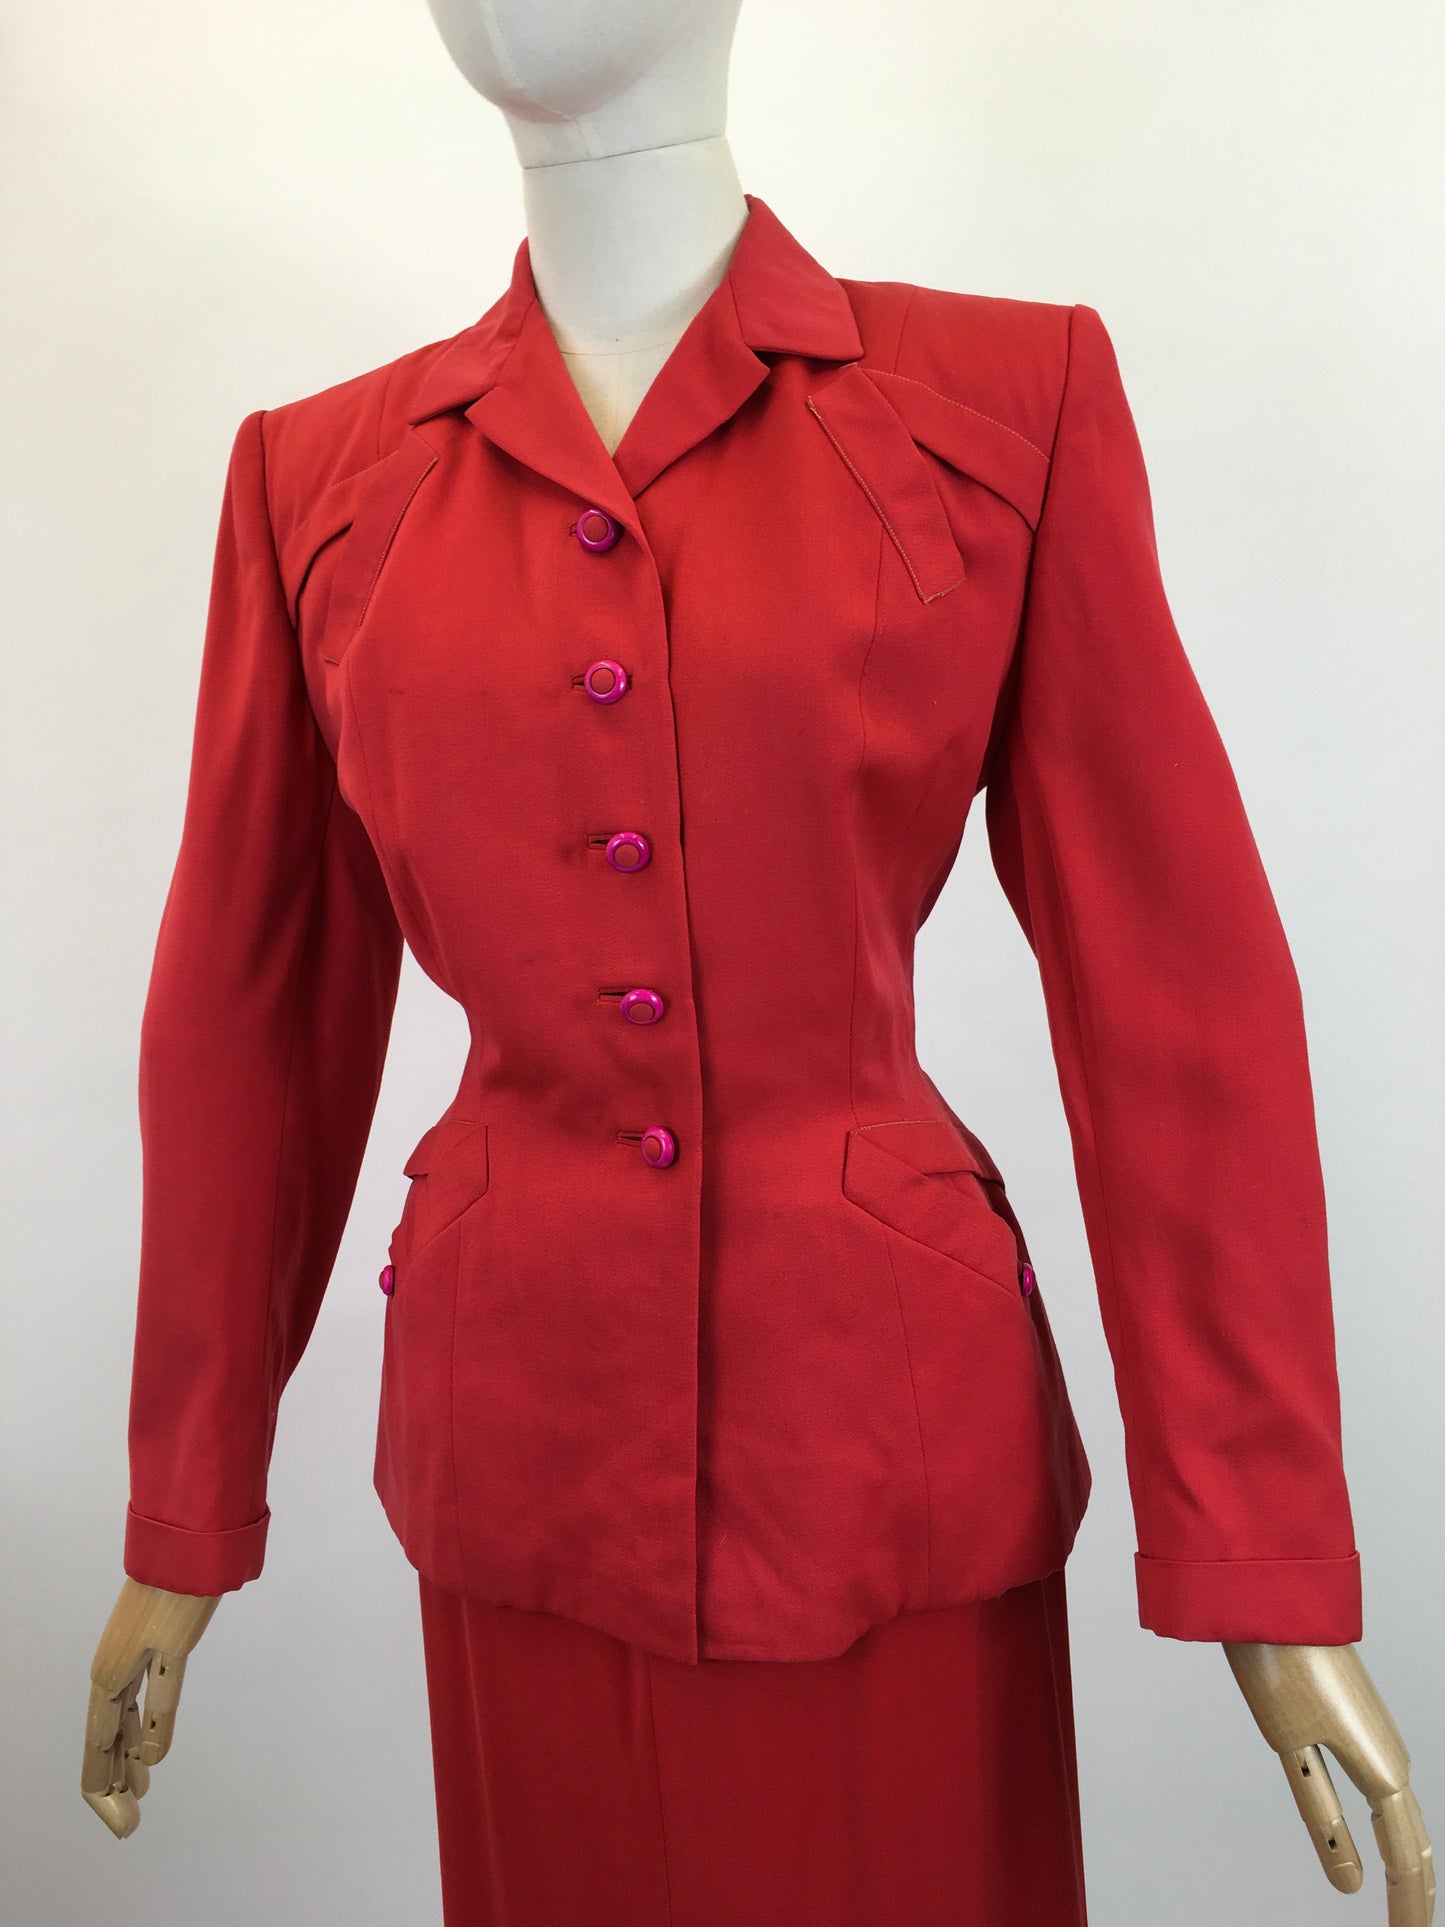 Original 1940's Stunning American 2pc Gaberdine Suit - In A Bright Lipstick Red